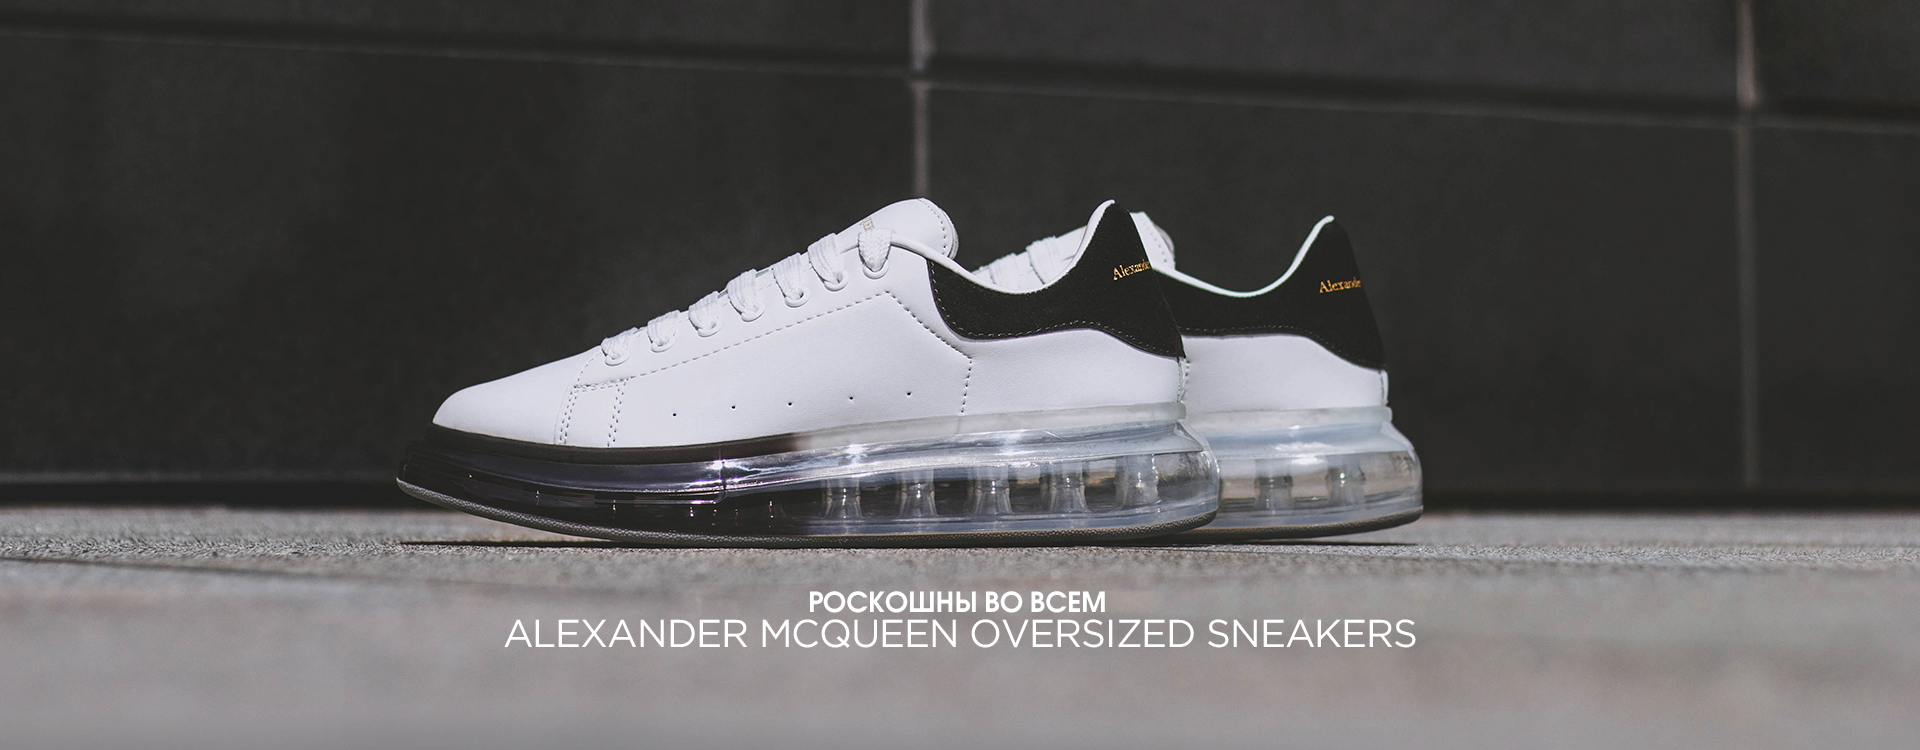 Кроссовки Alexander McQueen Oversized Sneakers